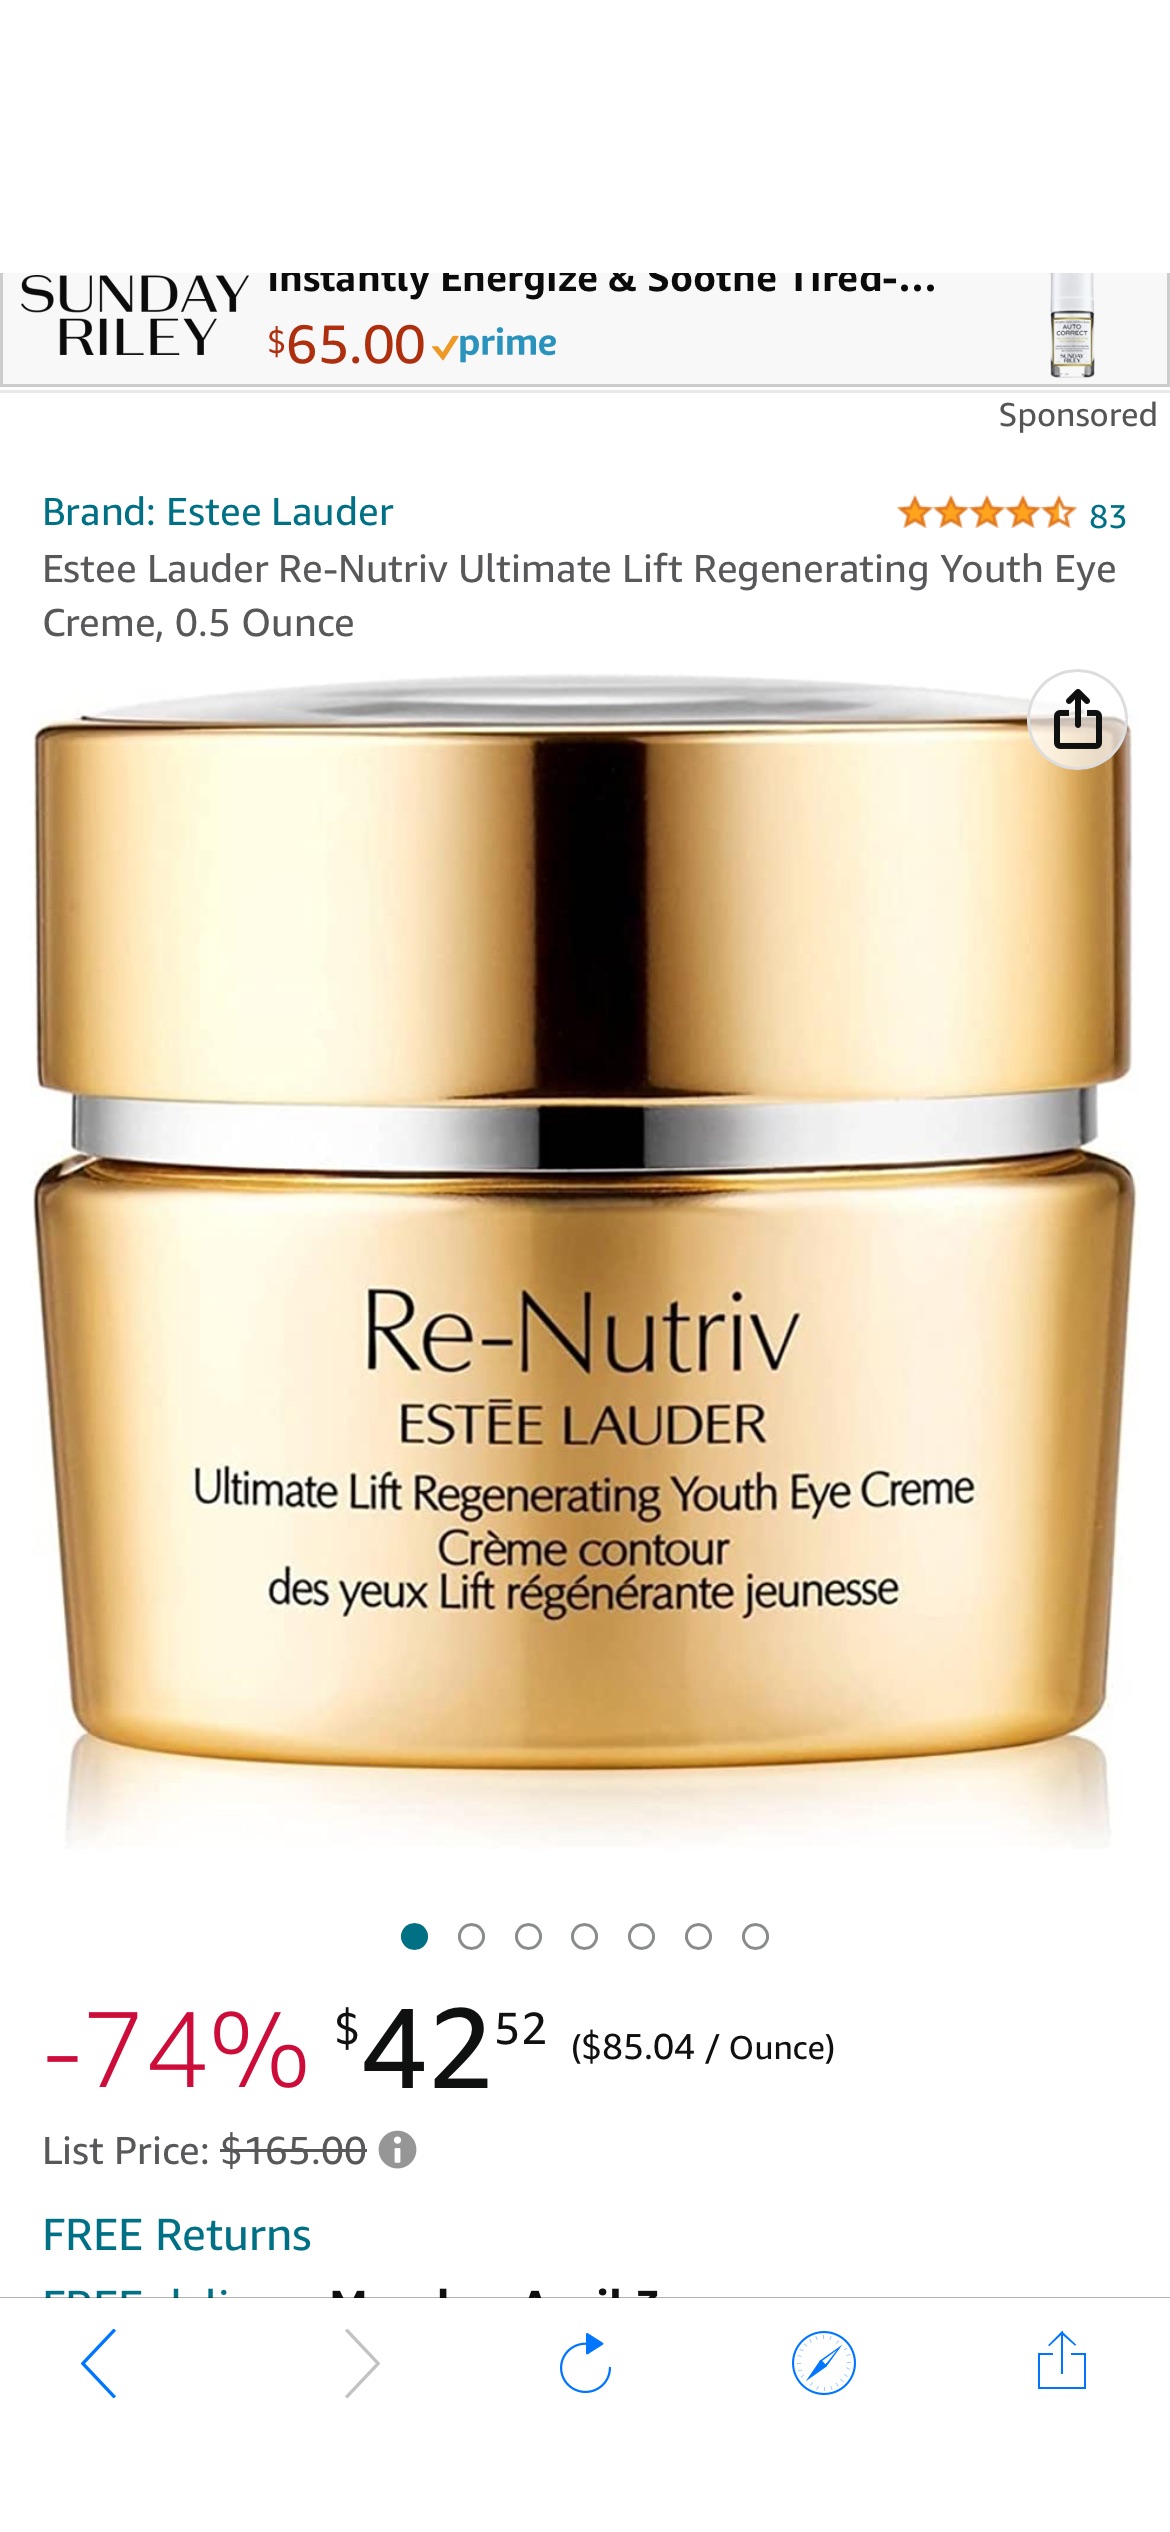 Estee Lauder Re-Nutriv Ultimate Lift Regenerating Youth Eye Creme, 0.5 Ounce